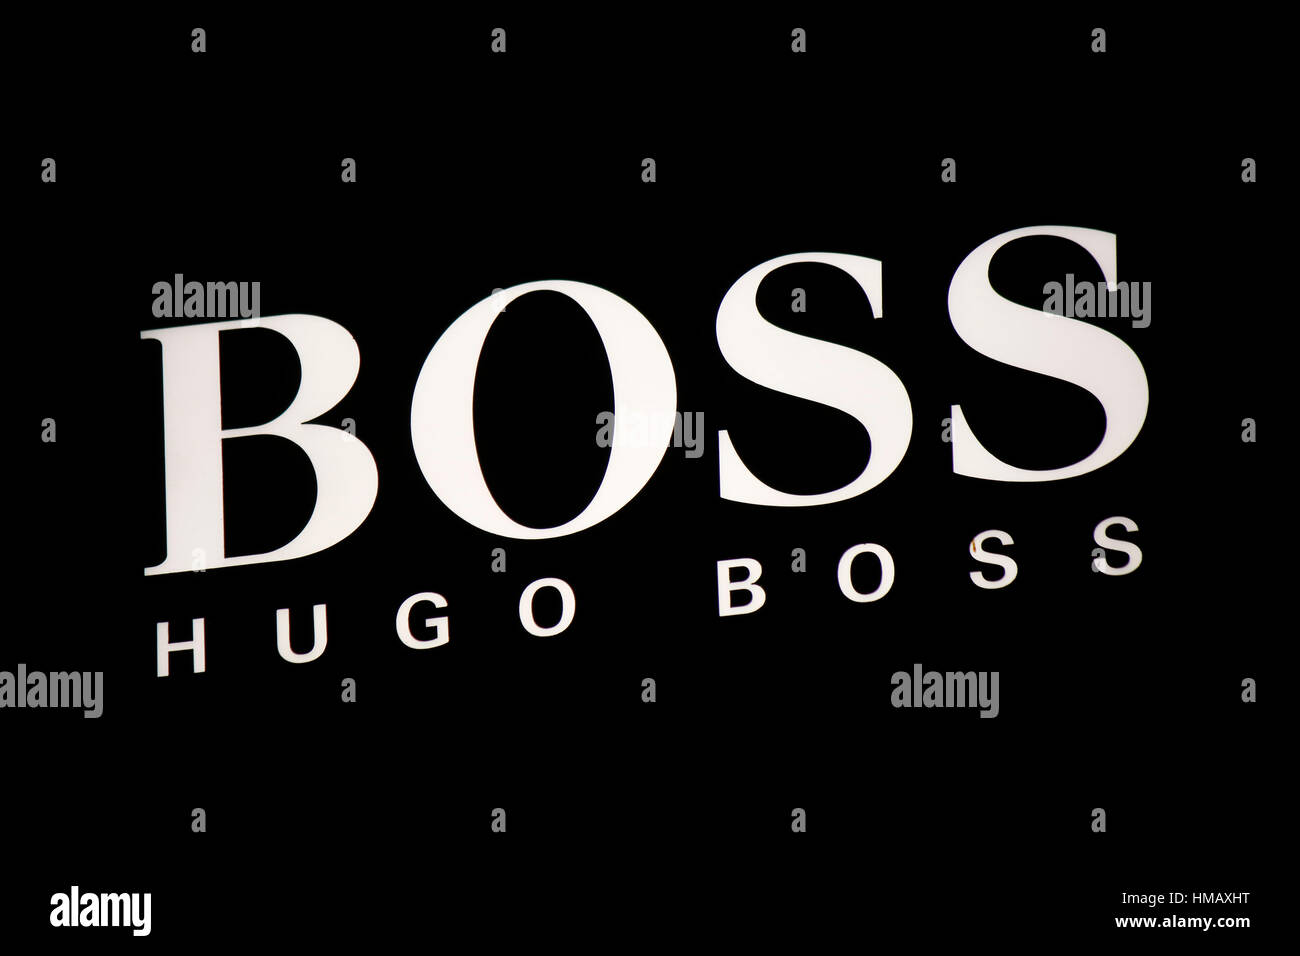 Das Logo der Marke "Boss", Berlin. Stockfoto